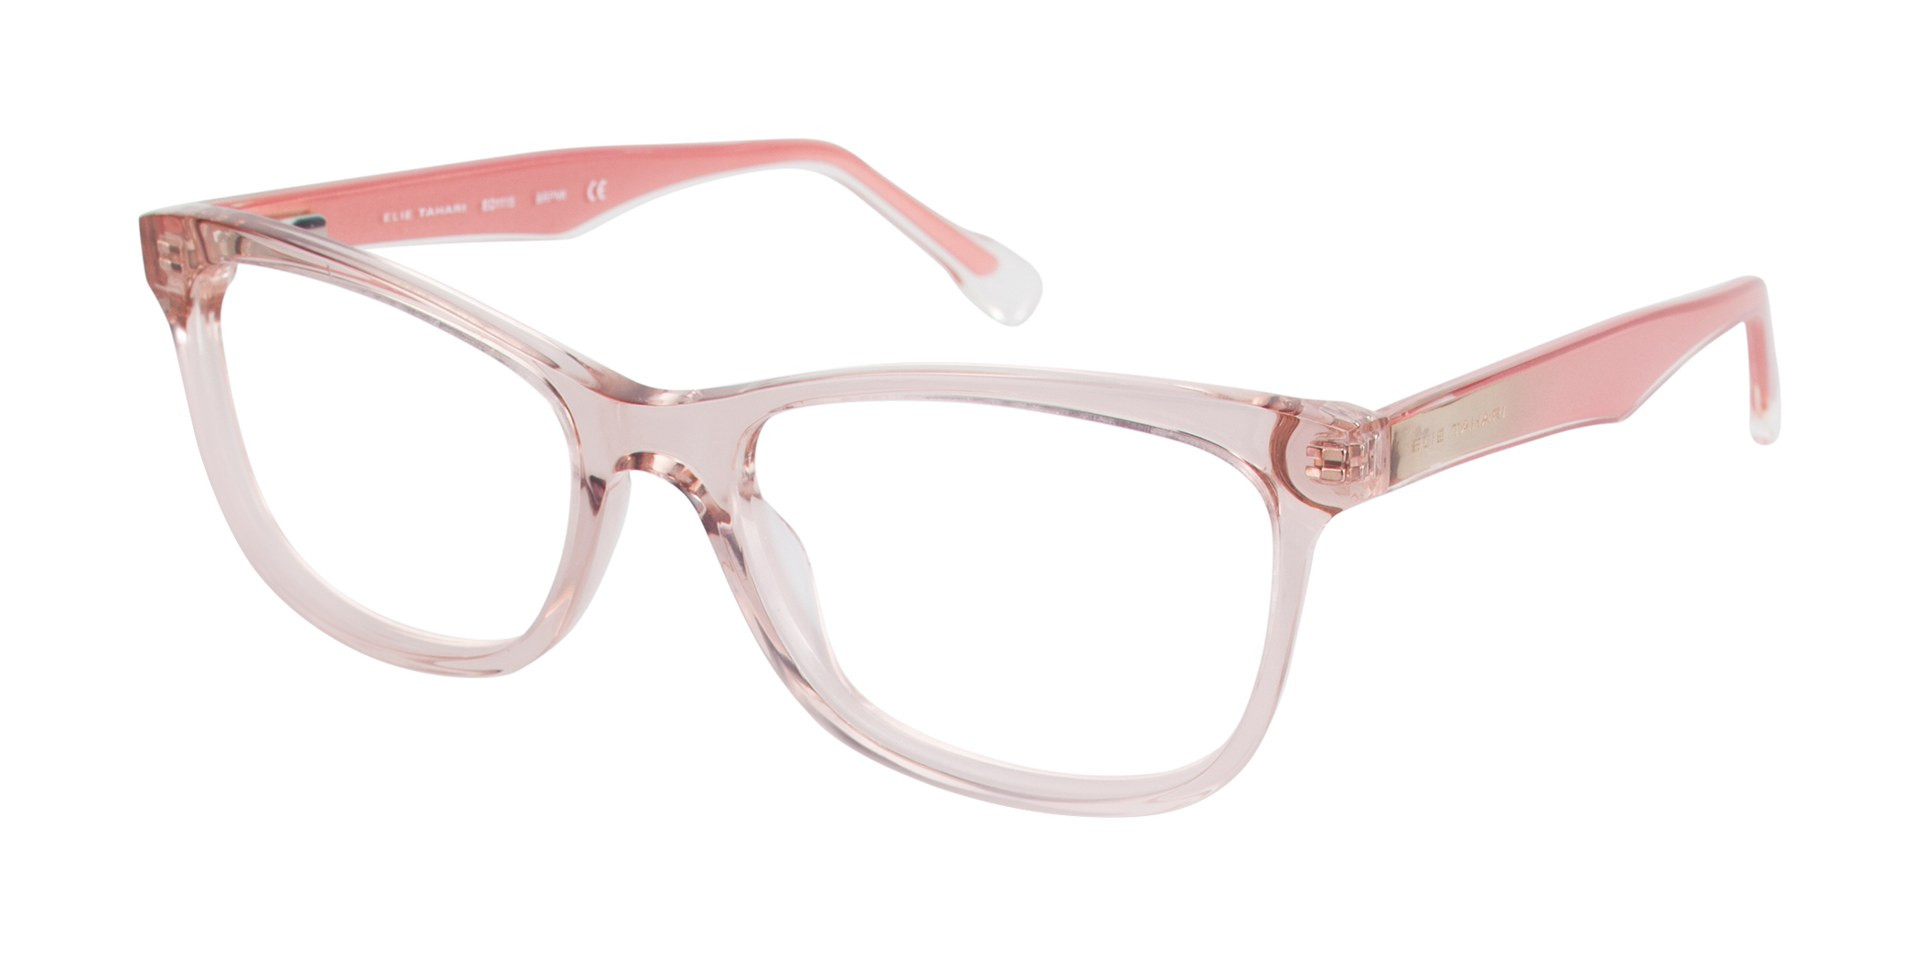 Elie Tahari EO115 Eyeglasses - Elie Tahari Authorized Retailer ...